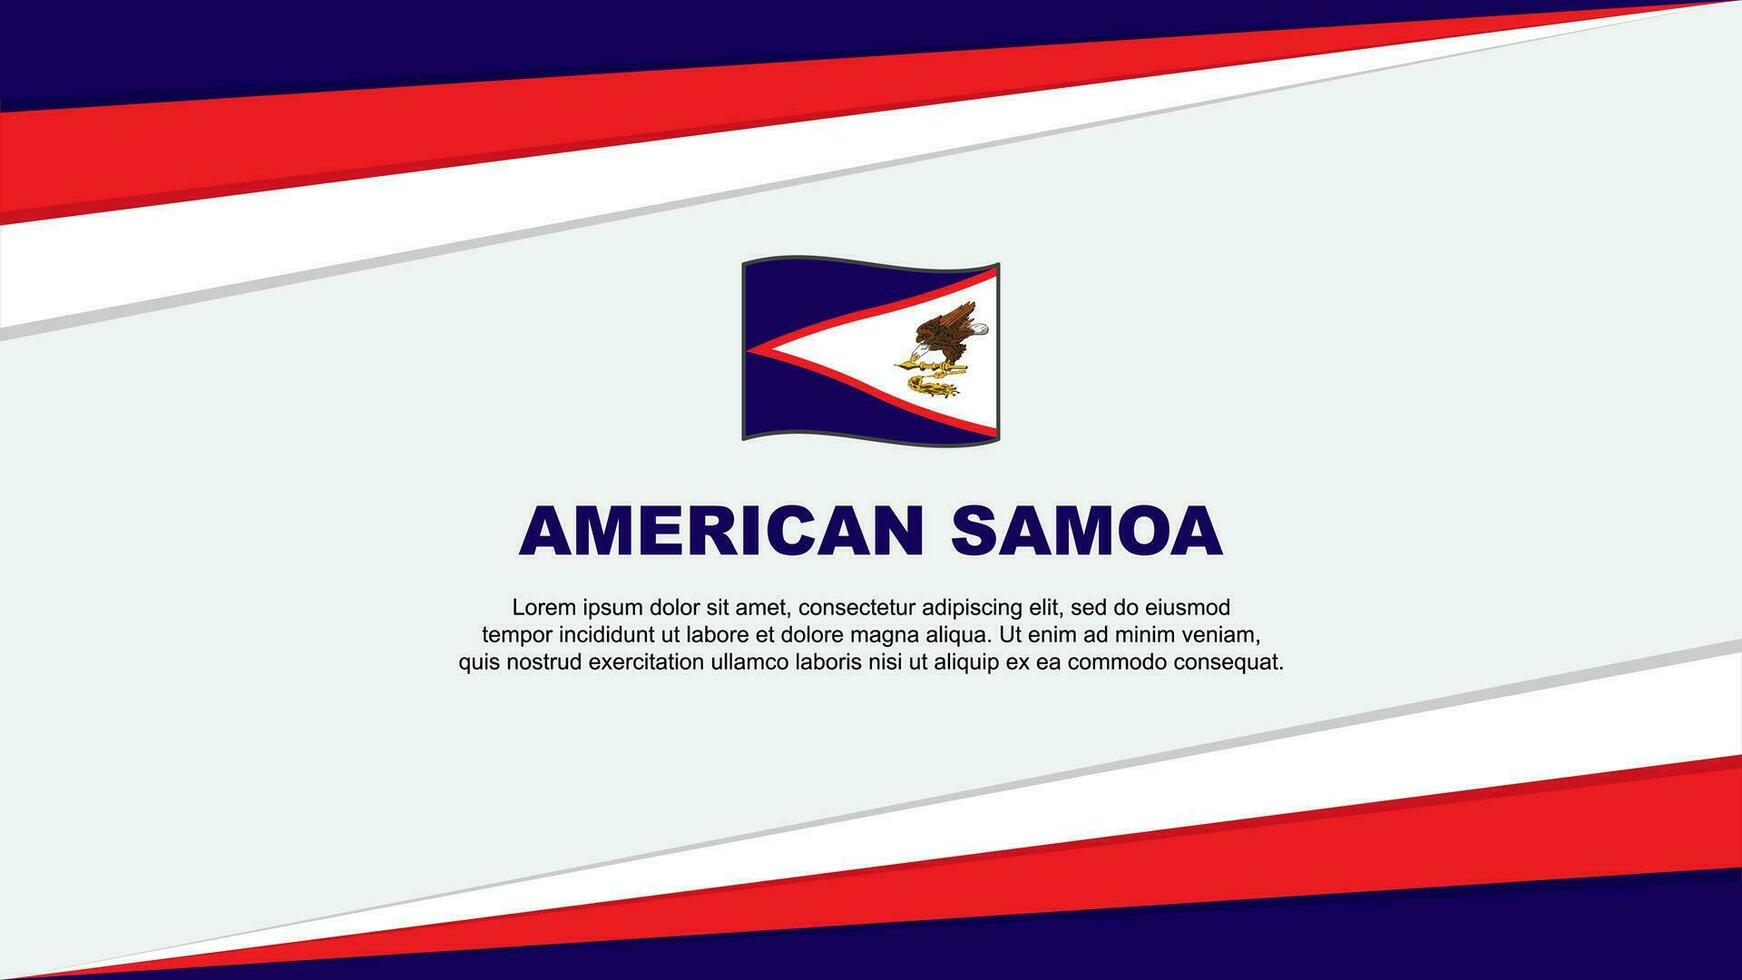 American Samoa Flag Abstract Background Design Template. American Samoa Independence Day Banner Cartoon Vector Illustration. American Samoa Design